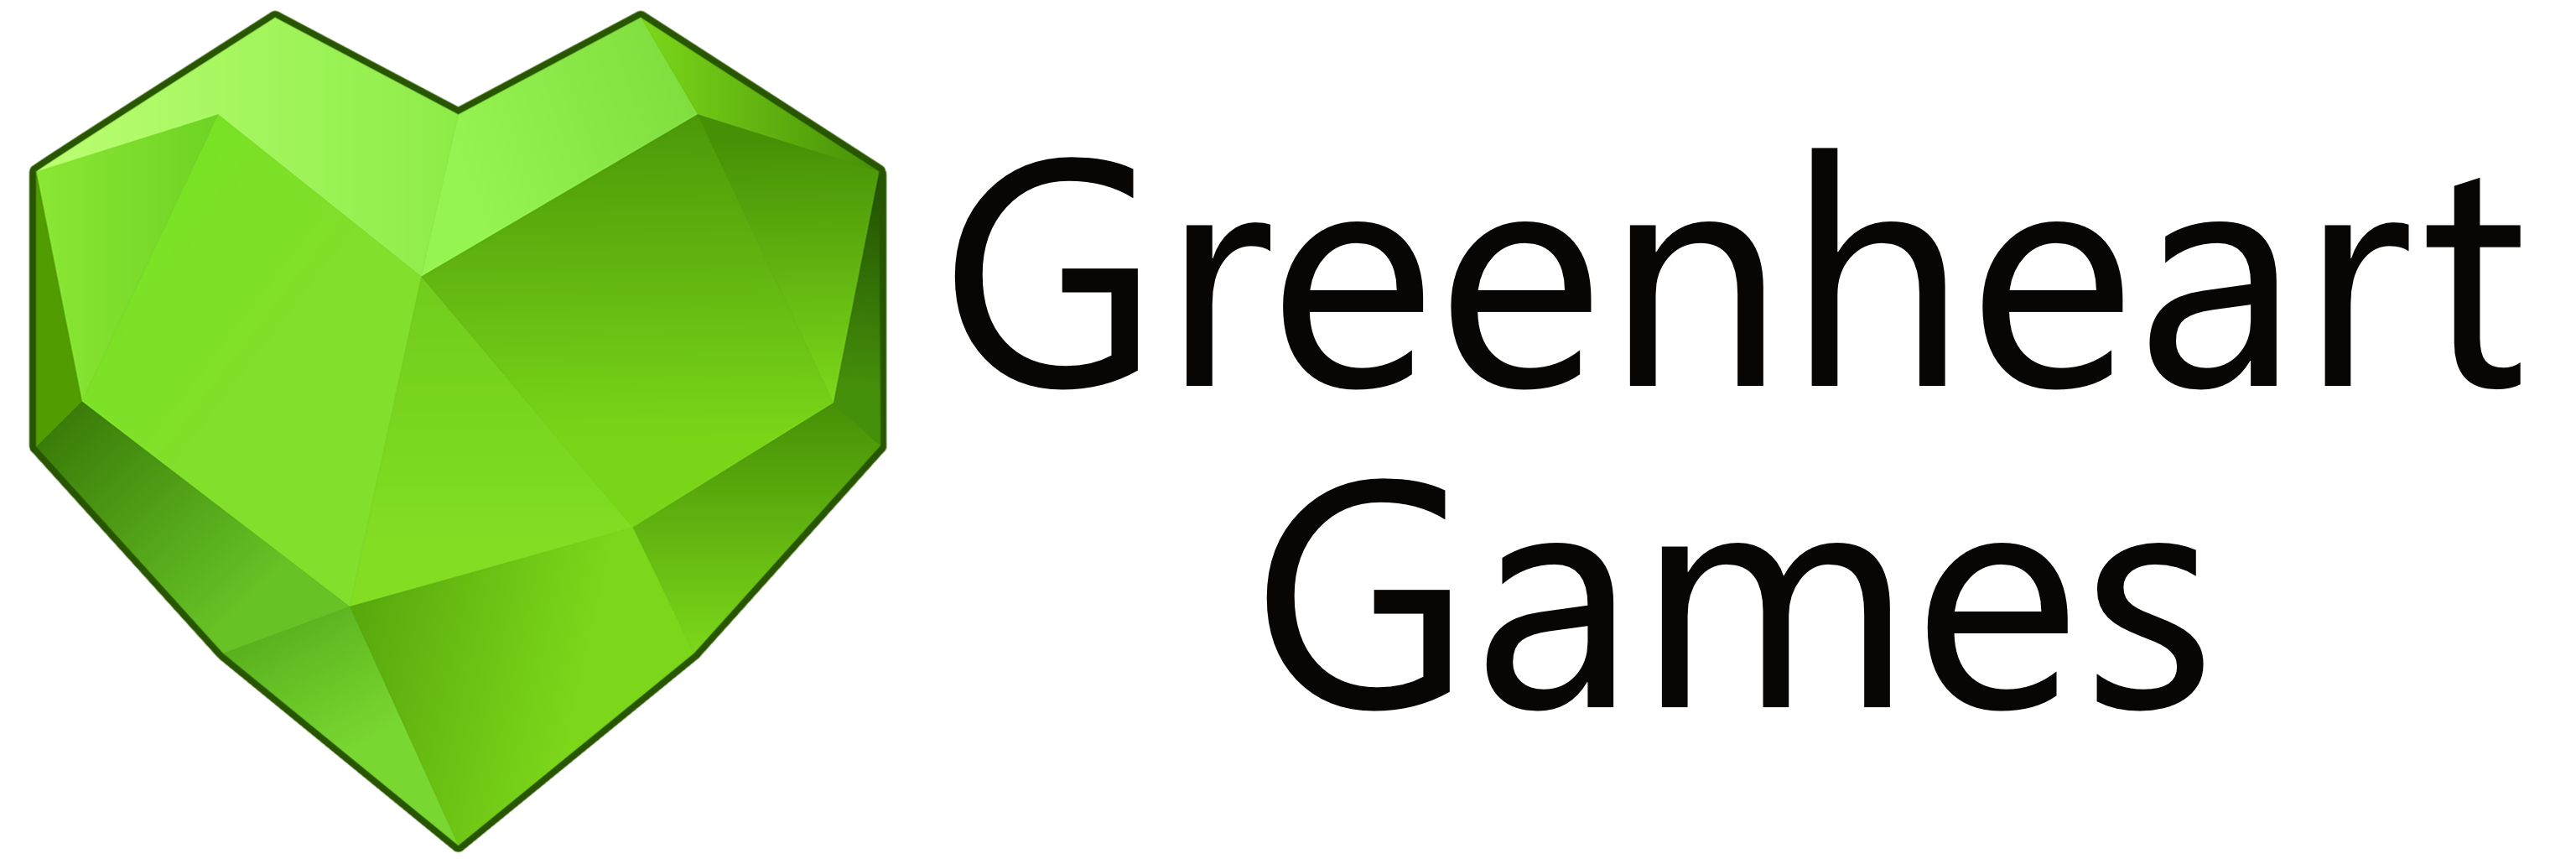 greenheart games-light.png